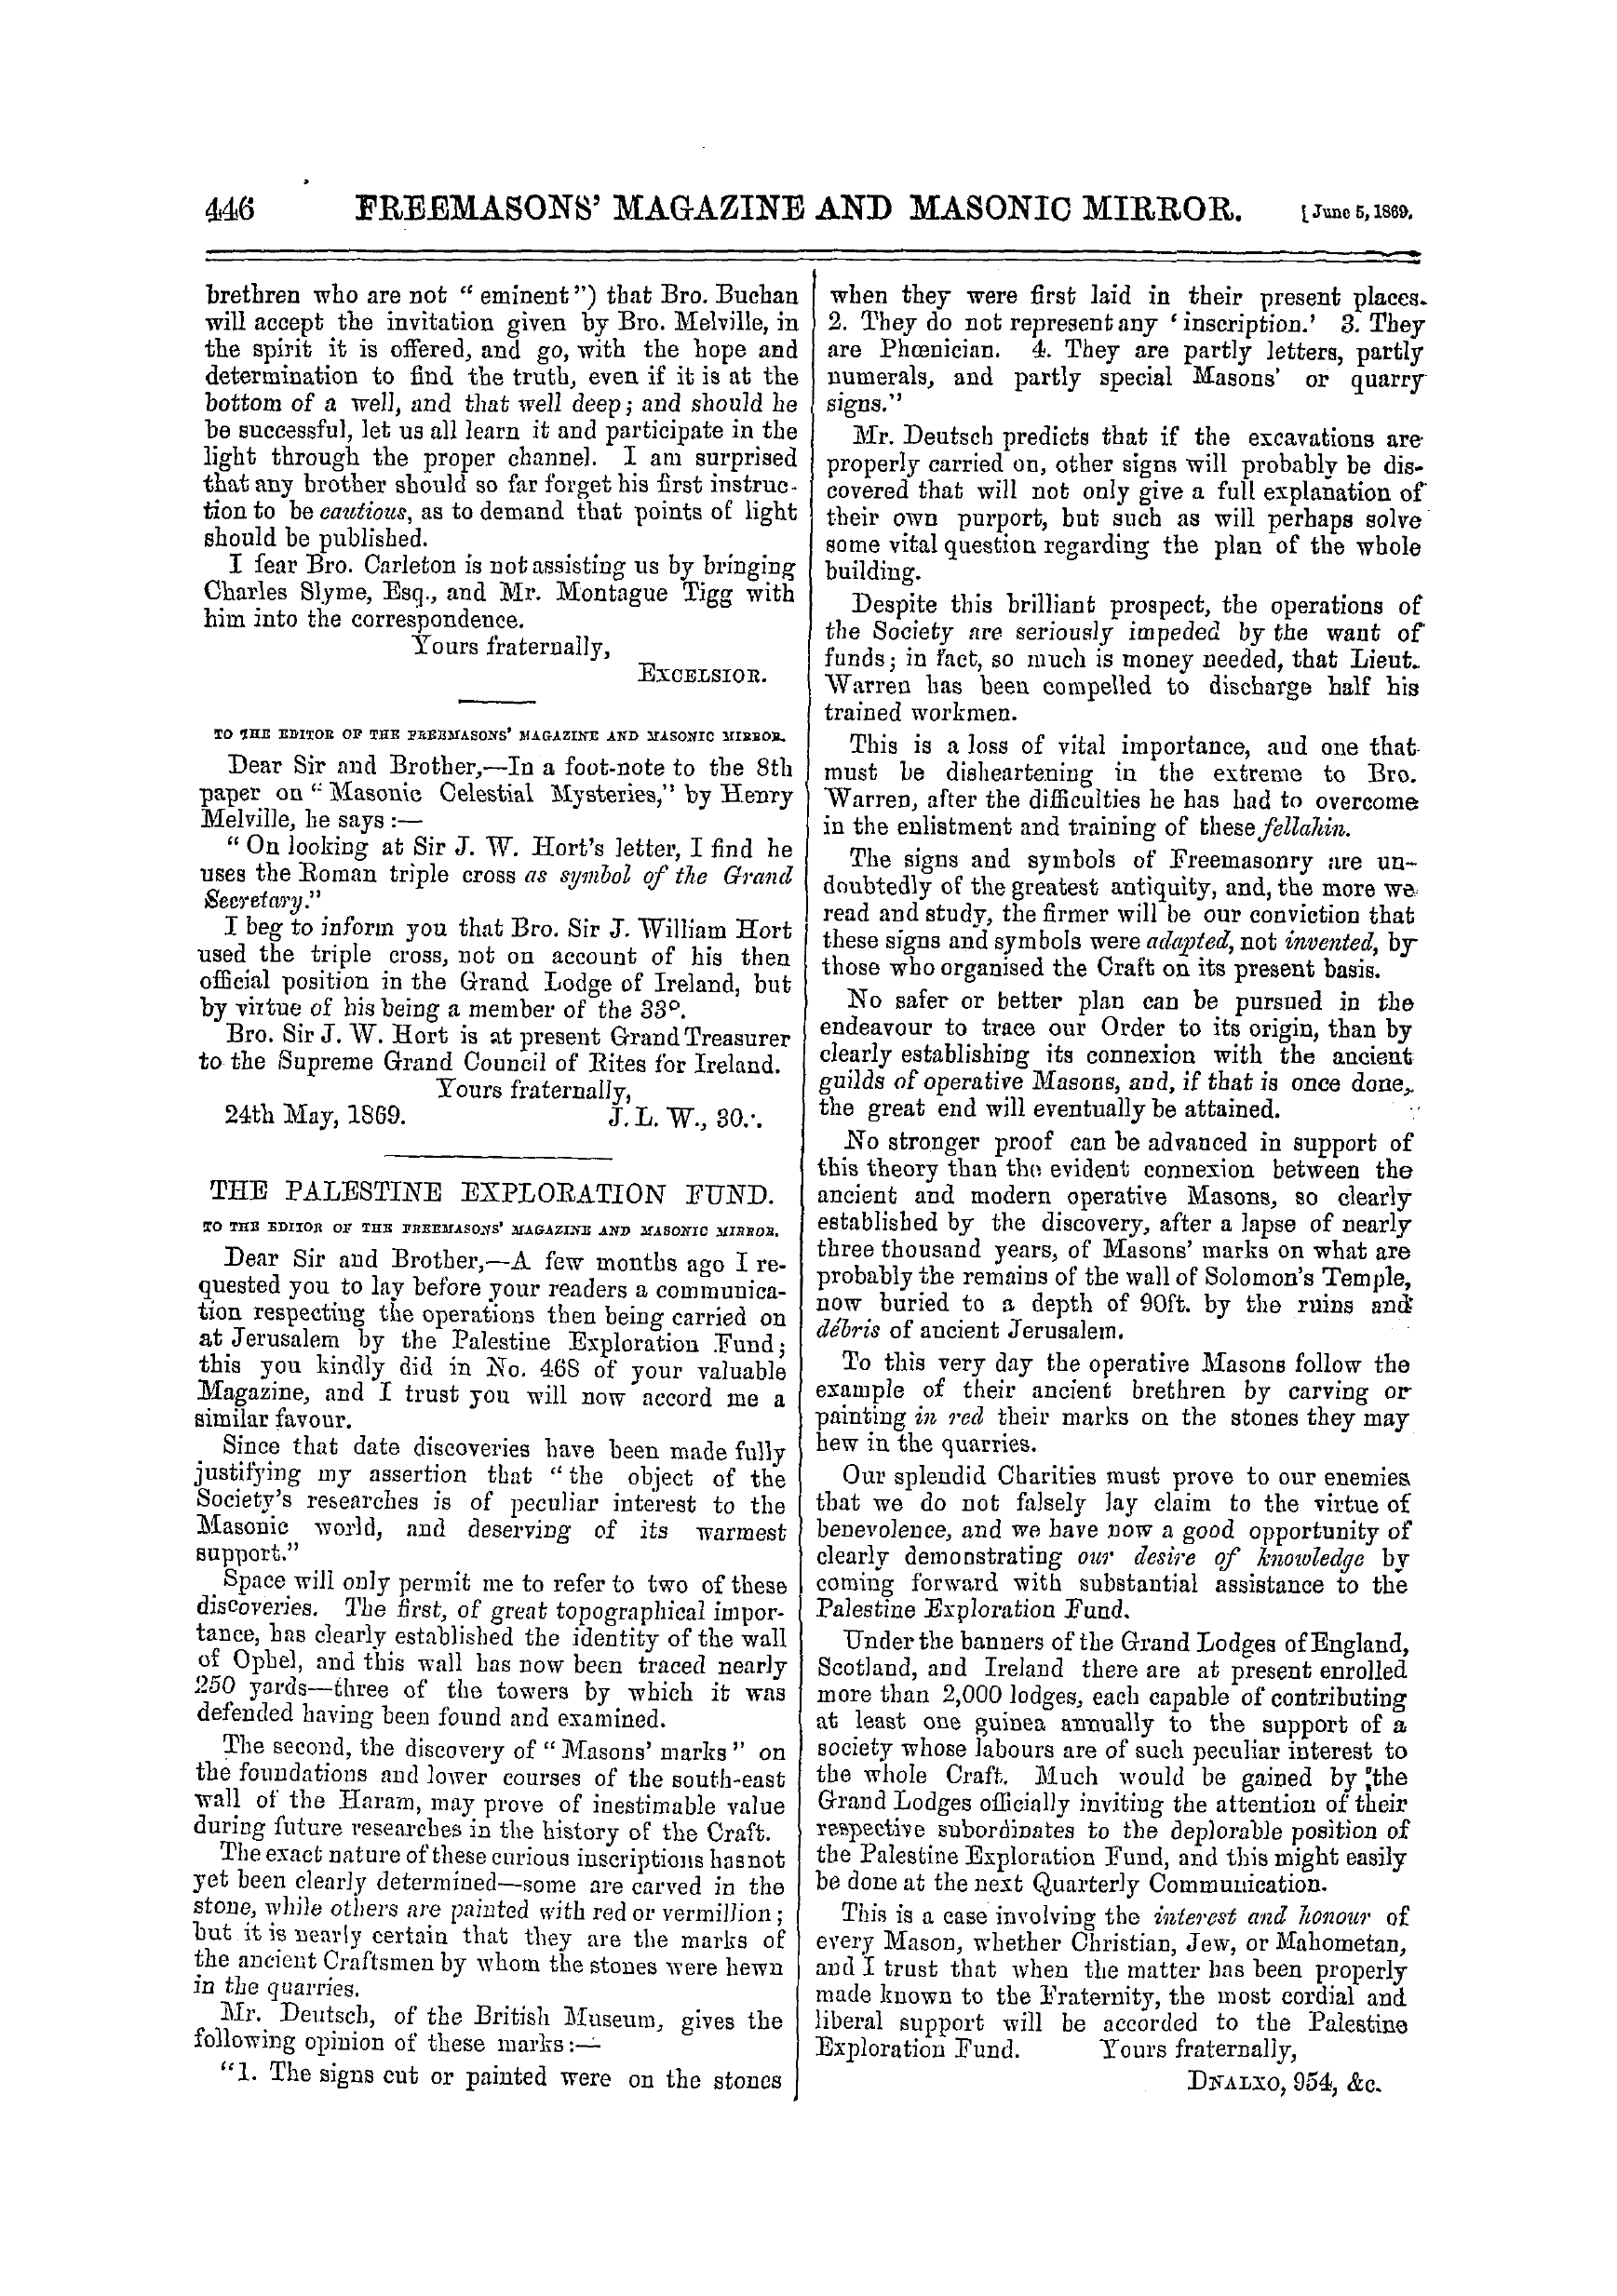 The Freemasons' Monthly Magazine: 1869-06-05 - The Palestine Exploration Fund.